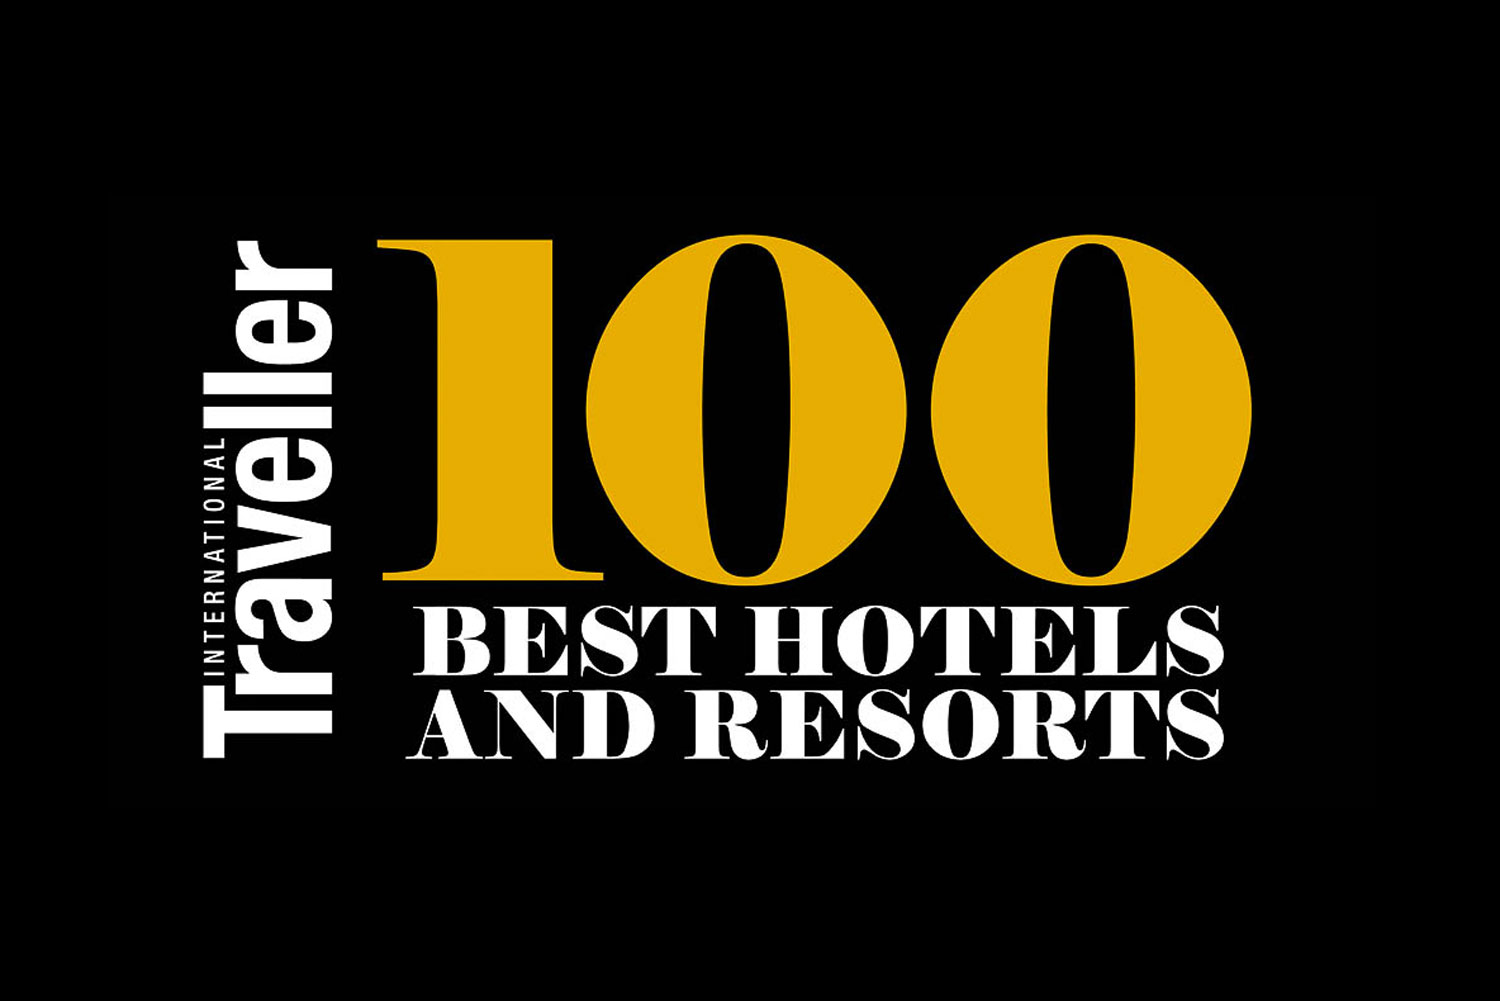 International Traveller's 100 Best Hotels and Resorts